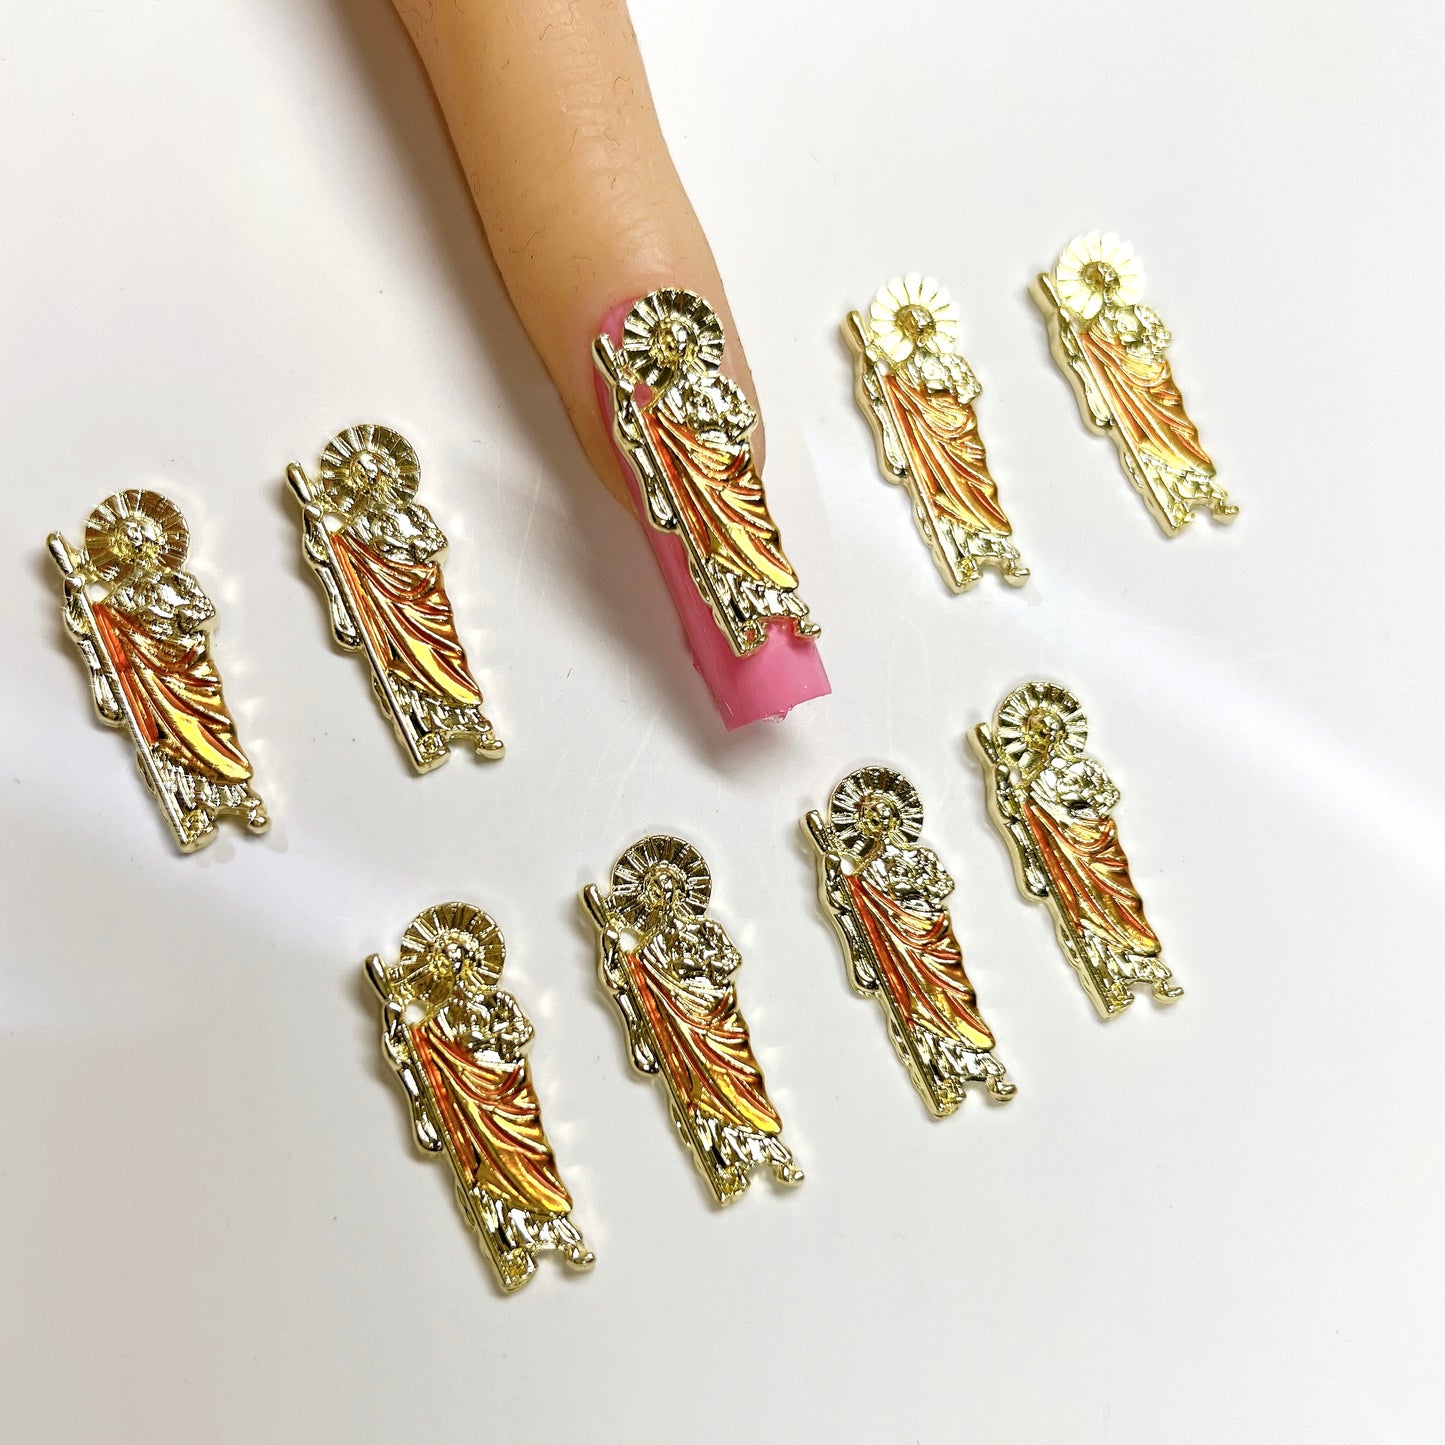 San Judas Charm for Nails - Copper Color